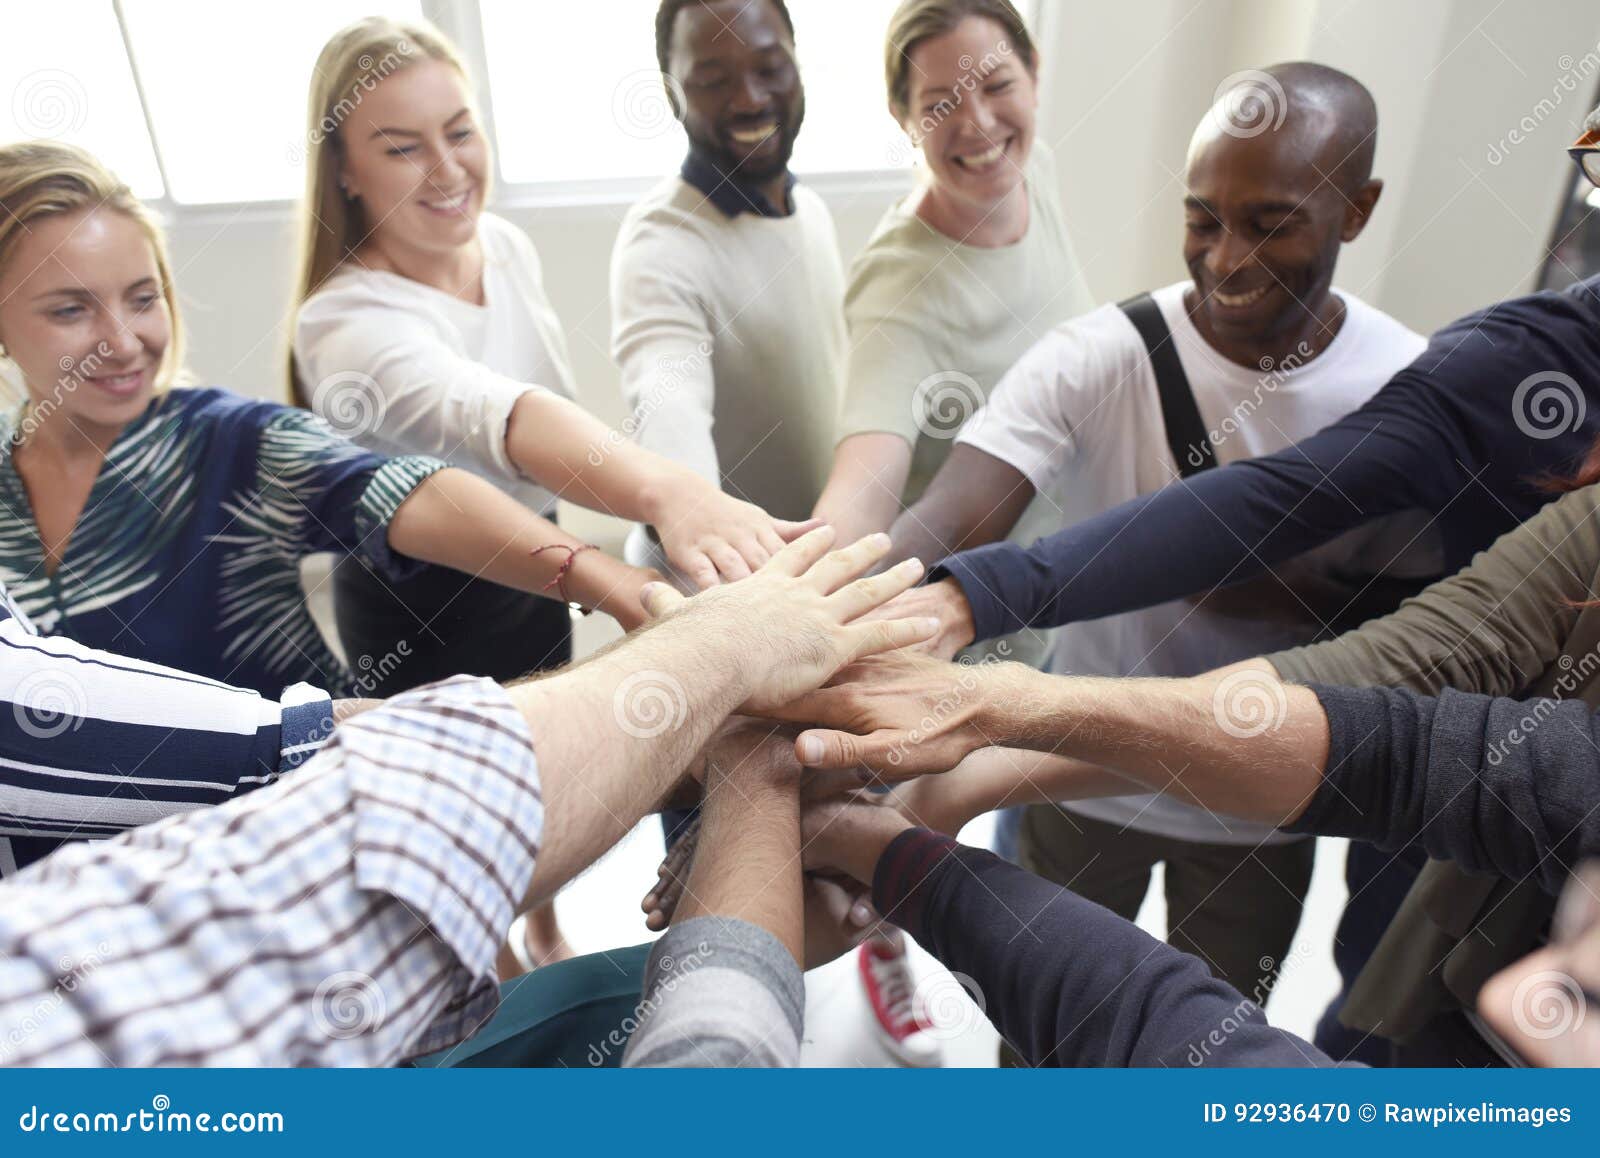 startup business people teamwork cooperation hands together